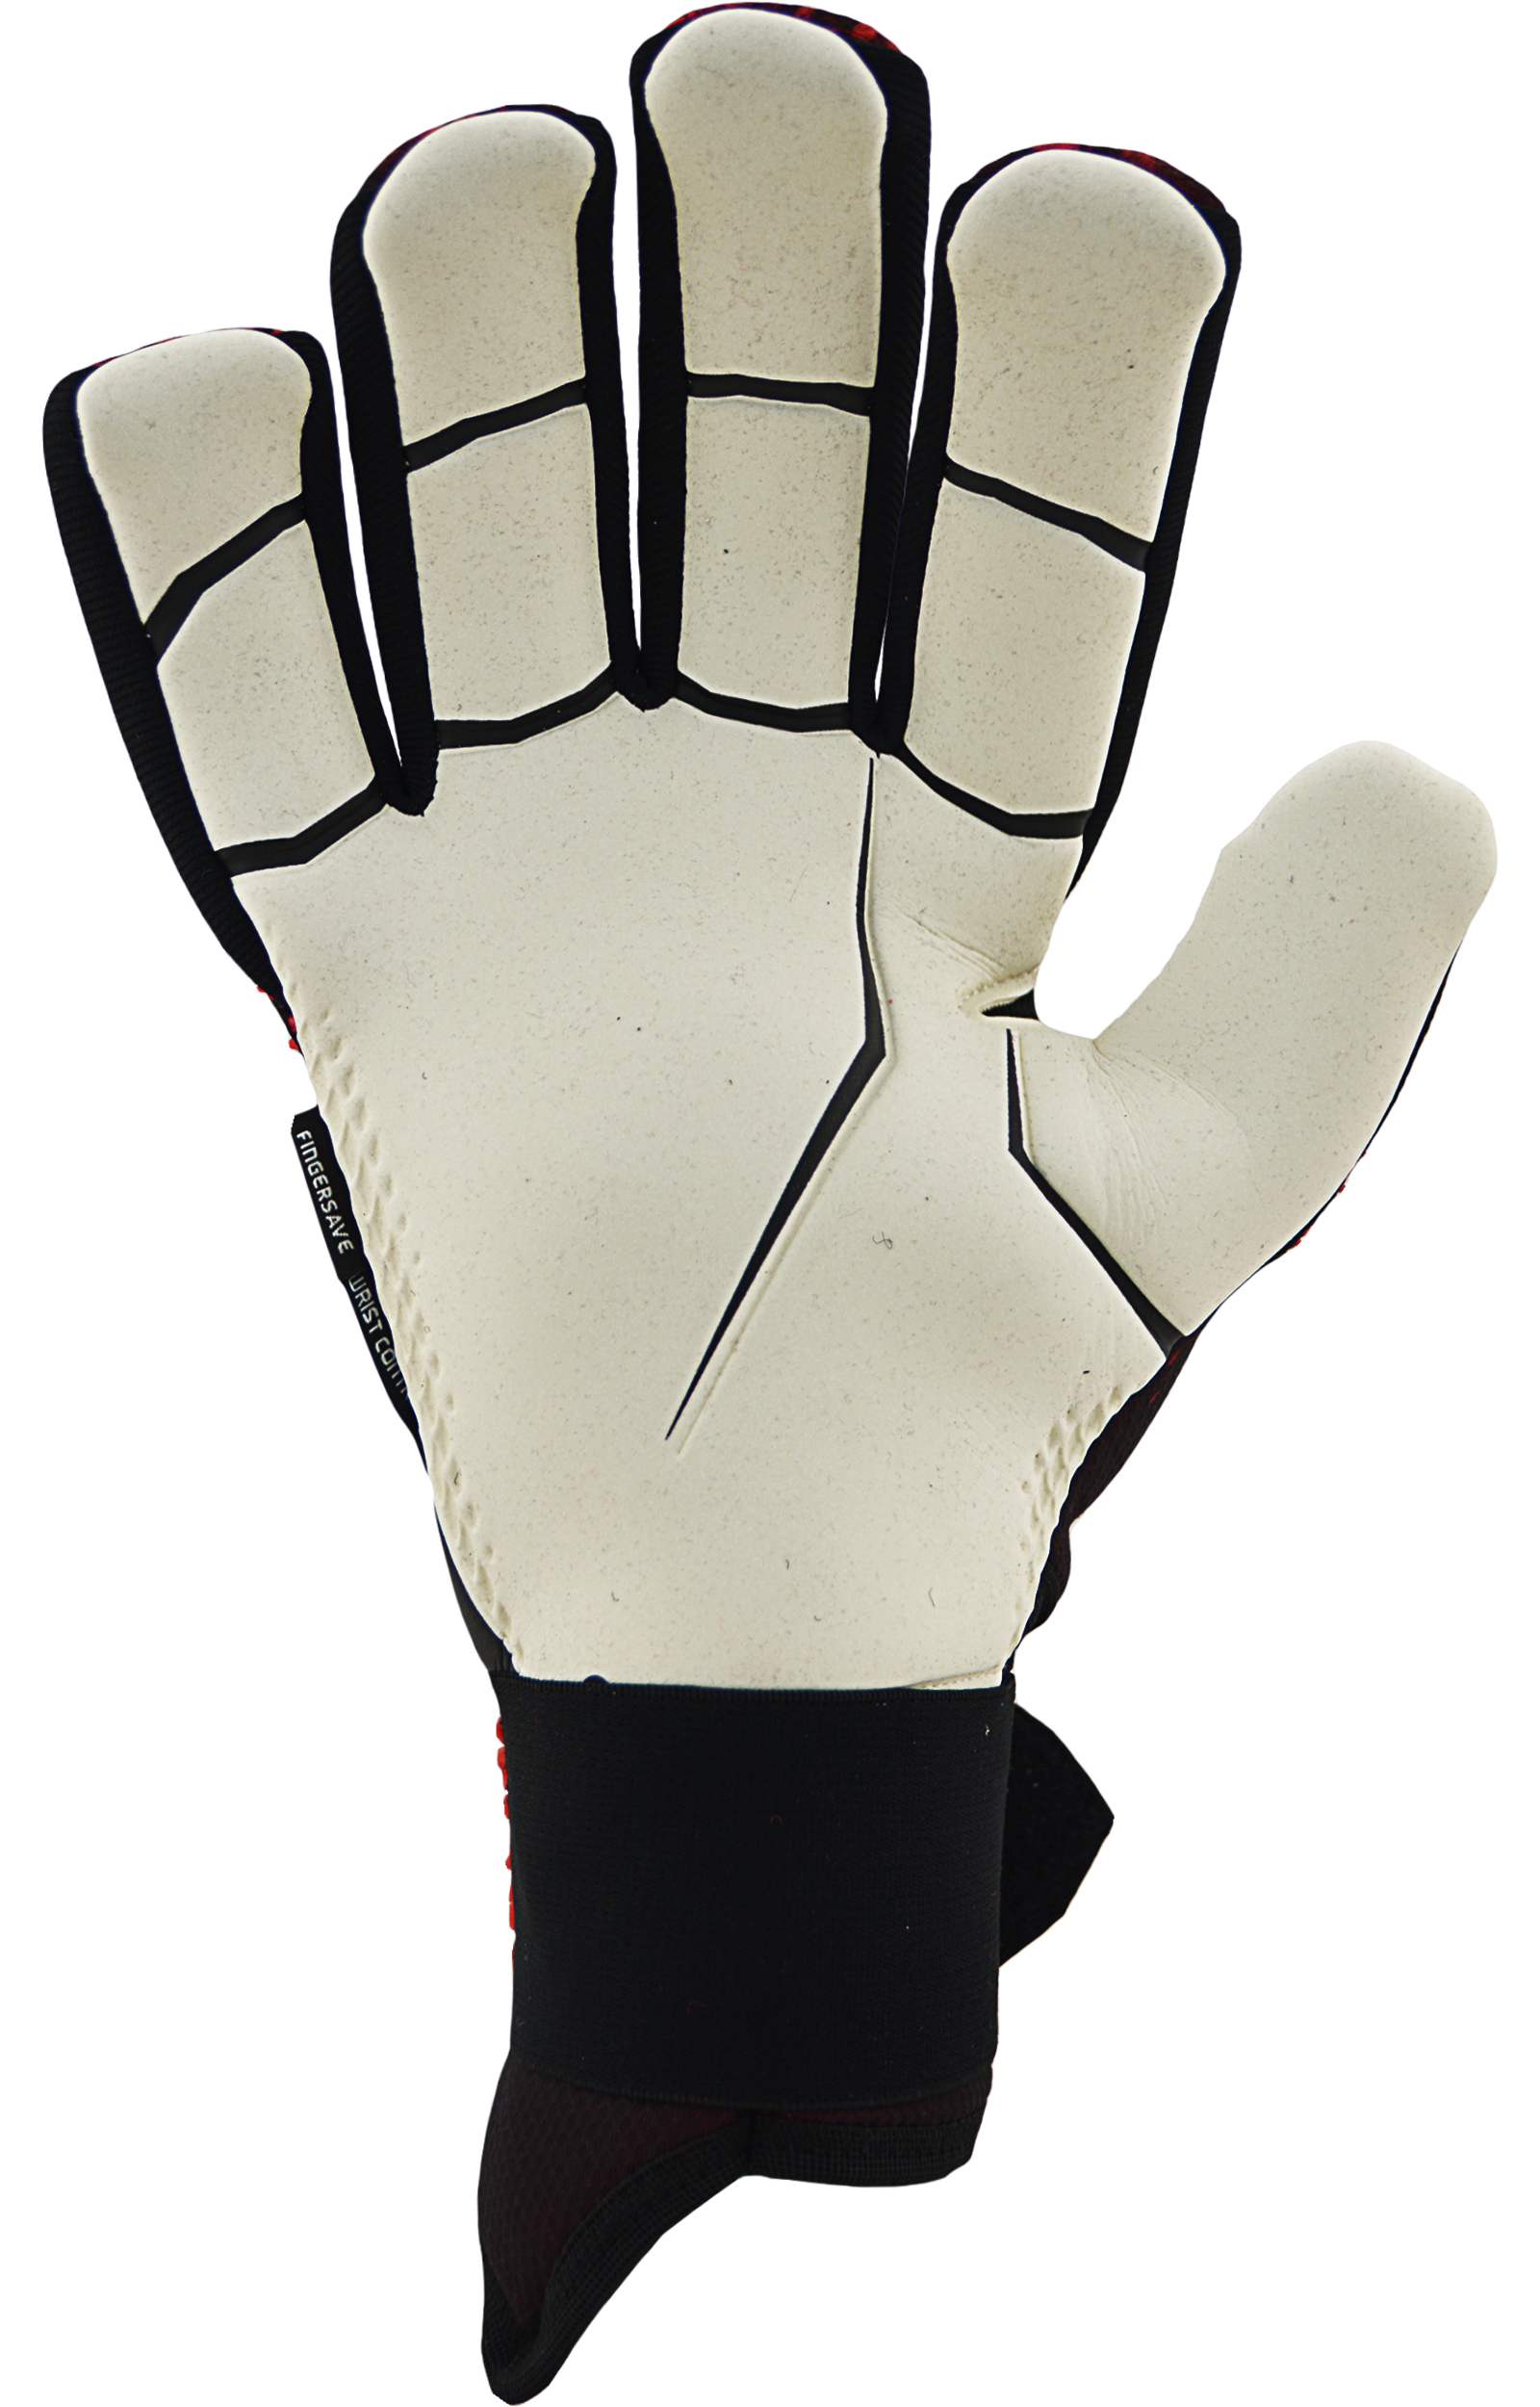 adidas Predator Ultimate GK Gloves - Red/White/Blk